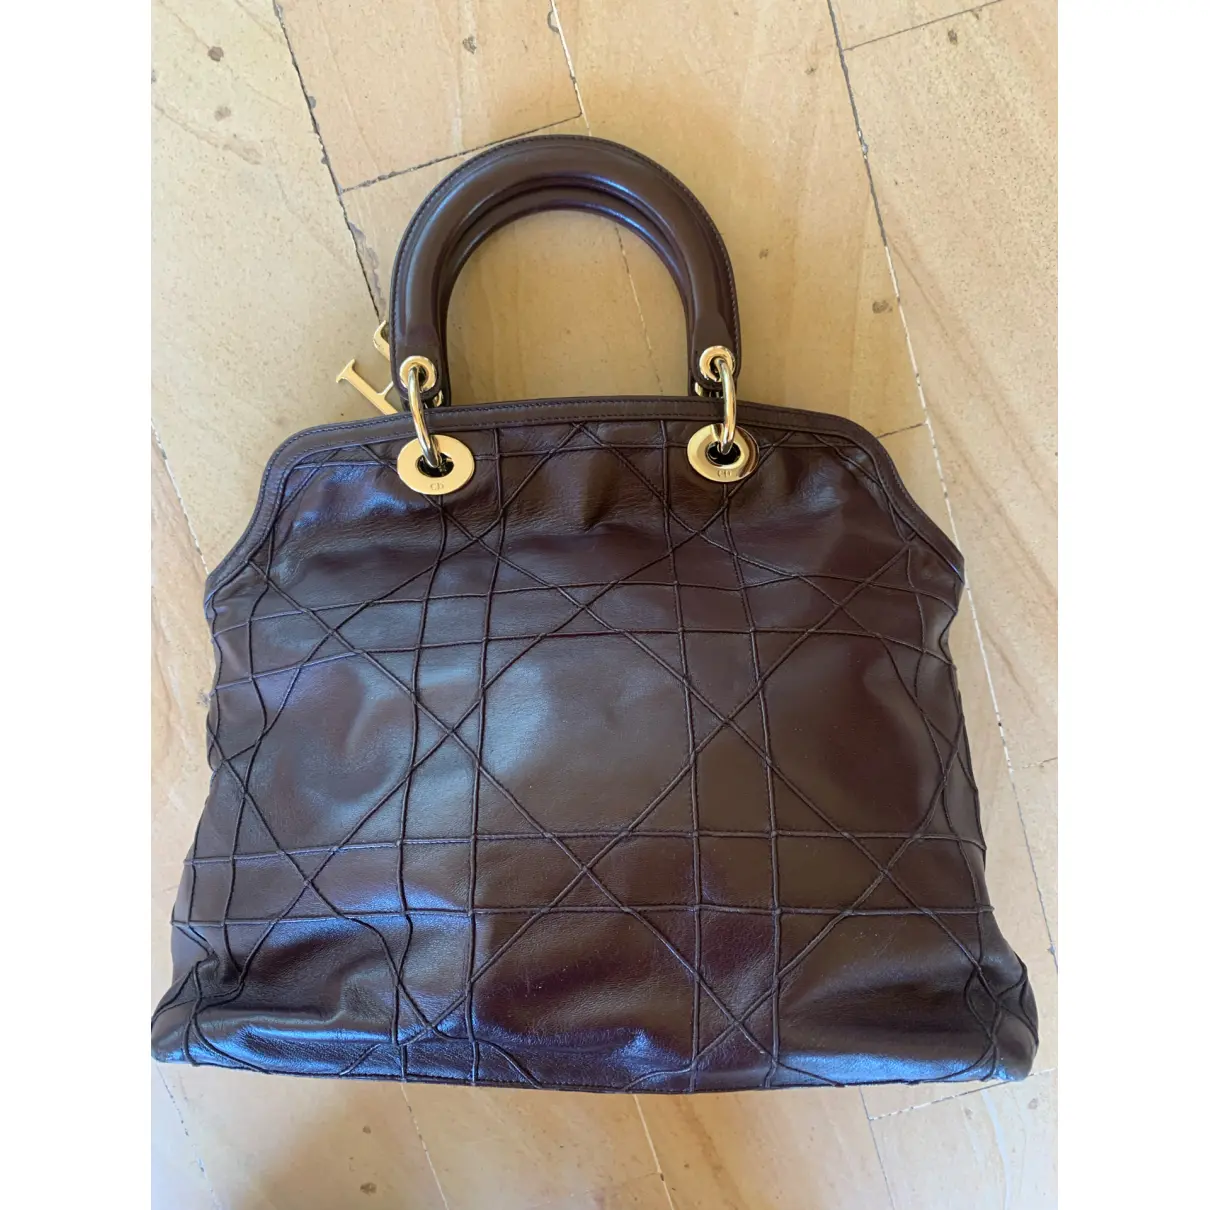 Buy Dior Granville leather handbag online